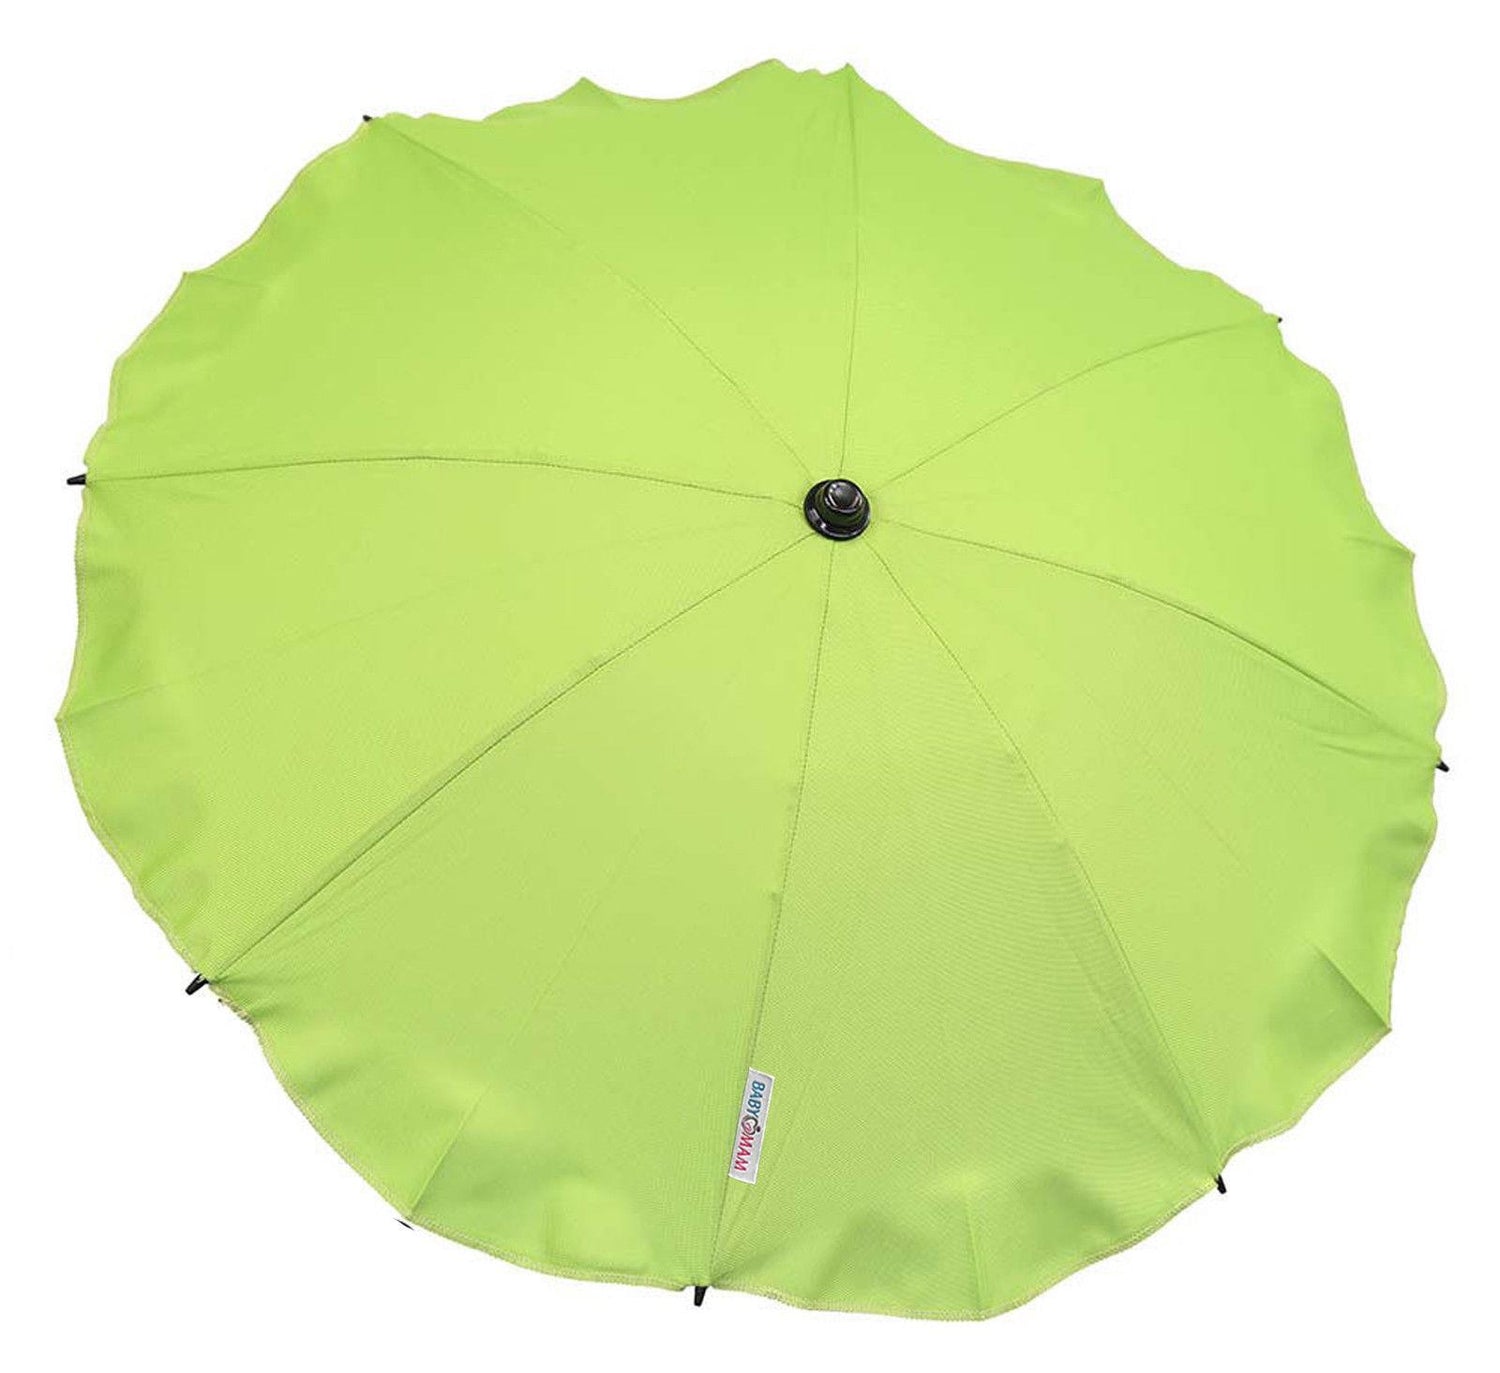 Baby Parasol Universal Sun Umbrella Pram Stroller Canopy Protect From Sun Rain Lime Green